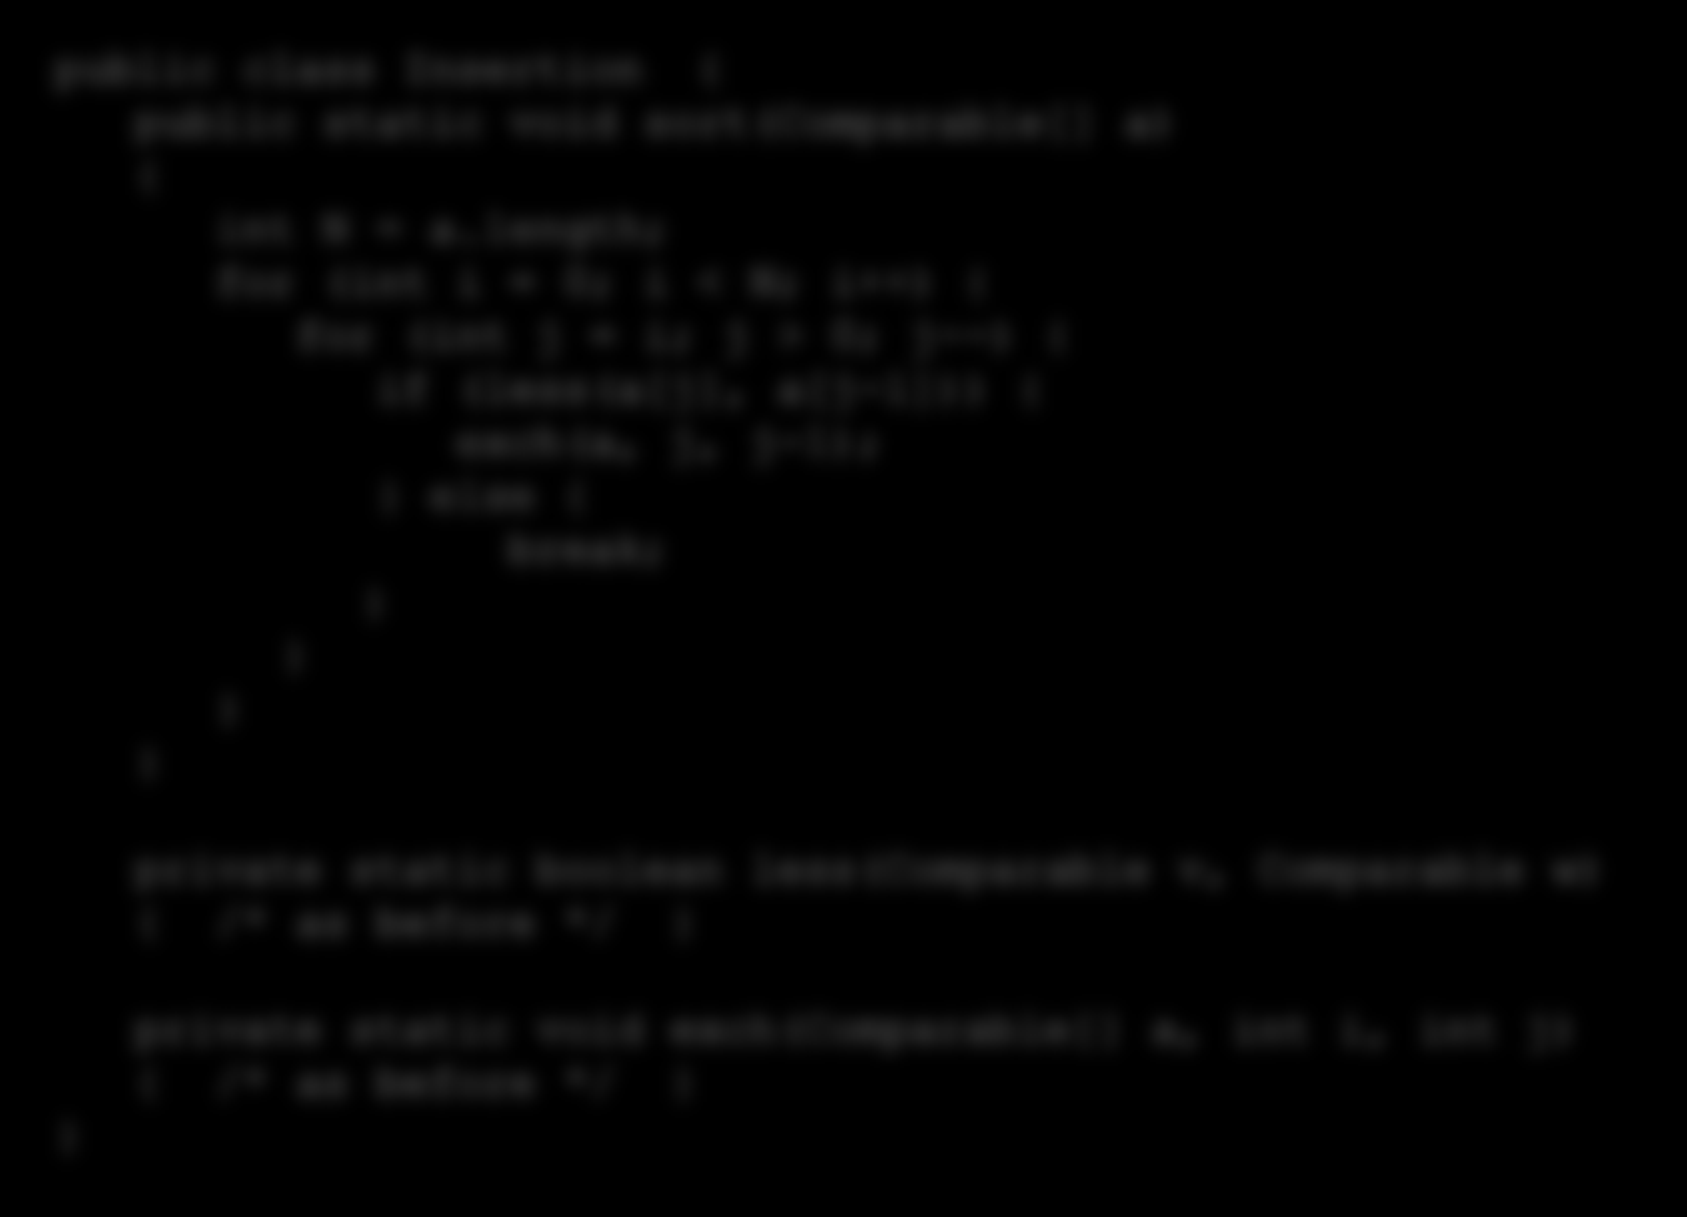 Insertion sort: Java implementation public class Insertion { public static void sort(comparable[] a) { int N = a.